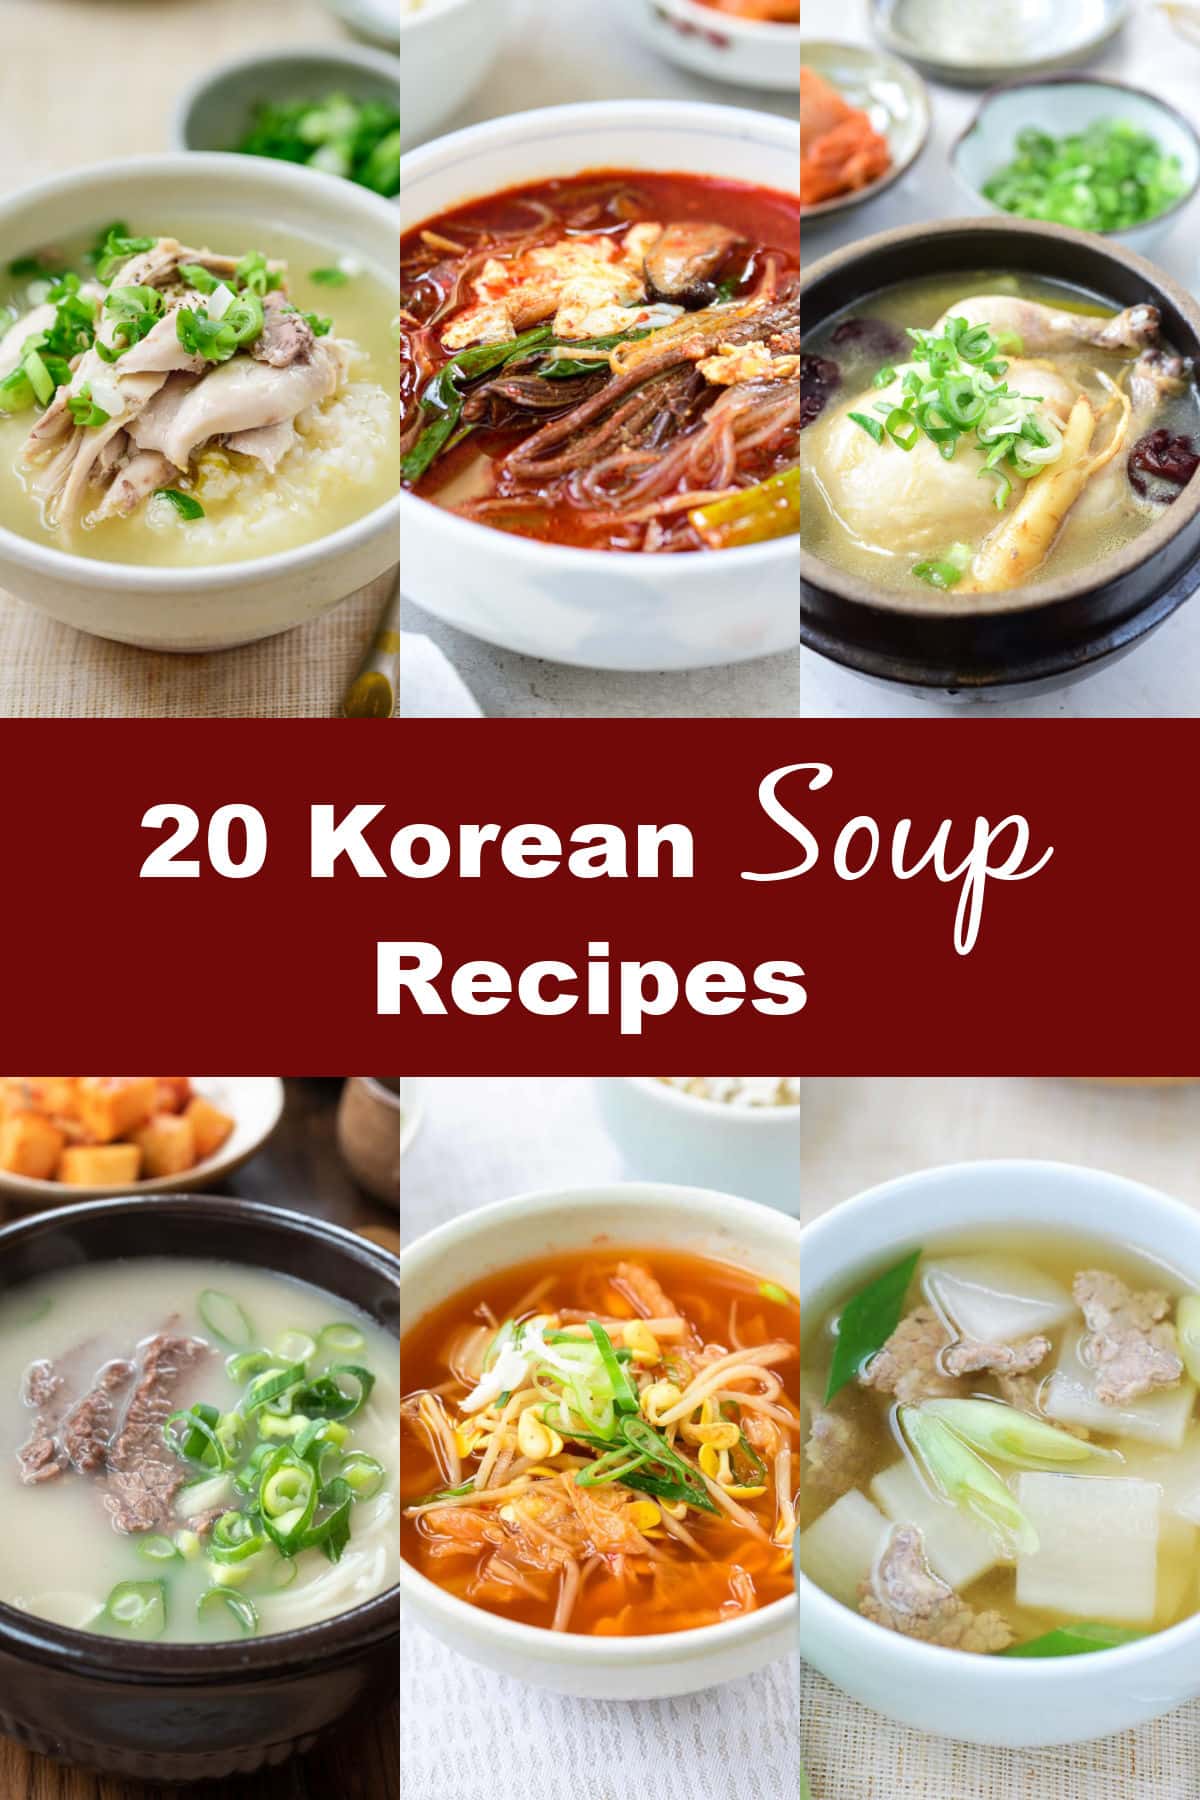 4 x 6 in 12 - 20 Korean Soup Recipes